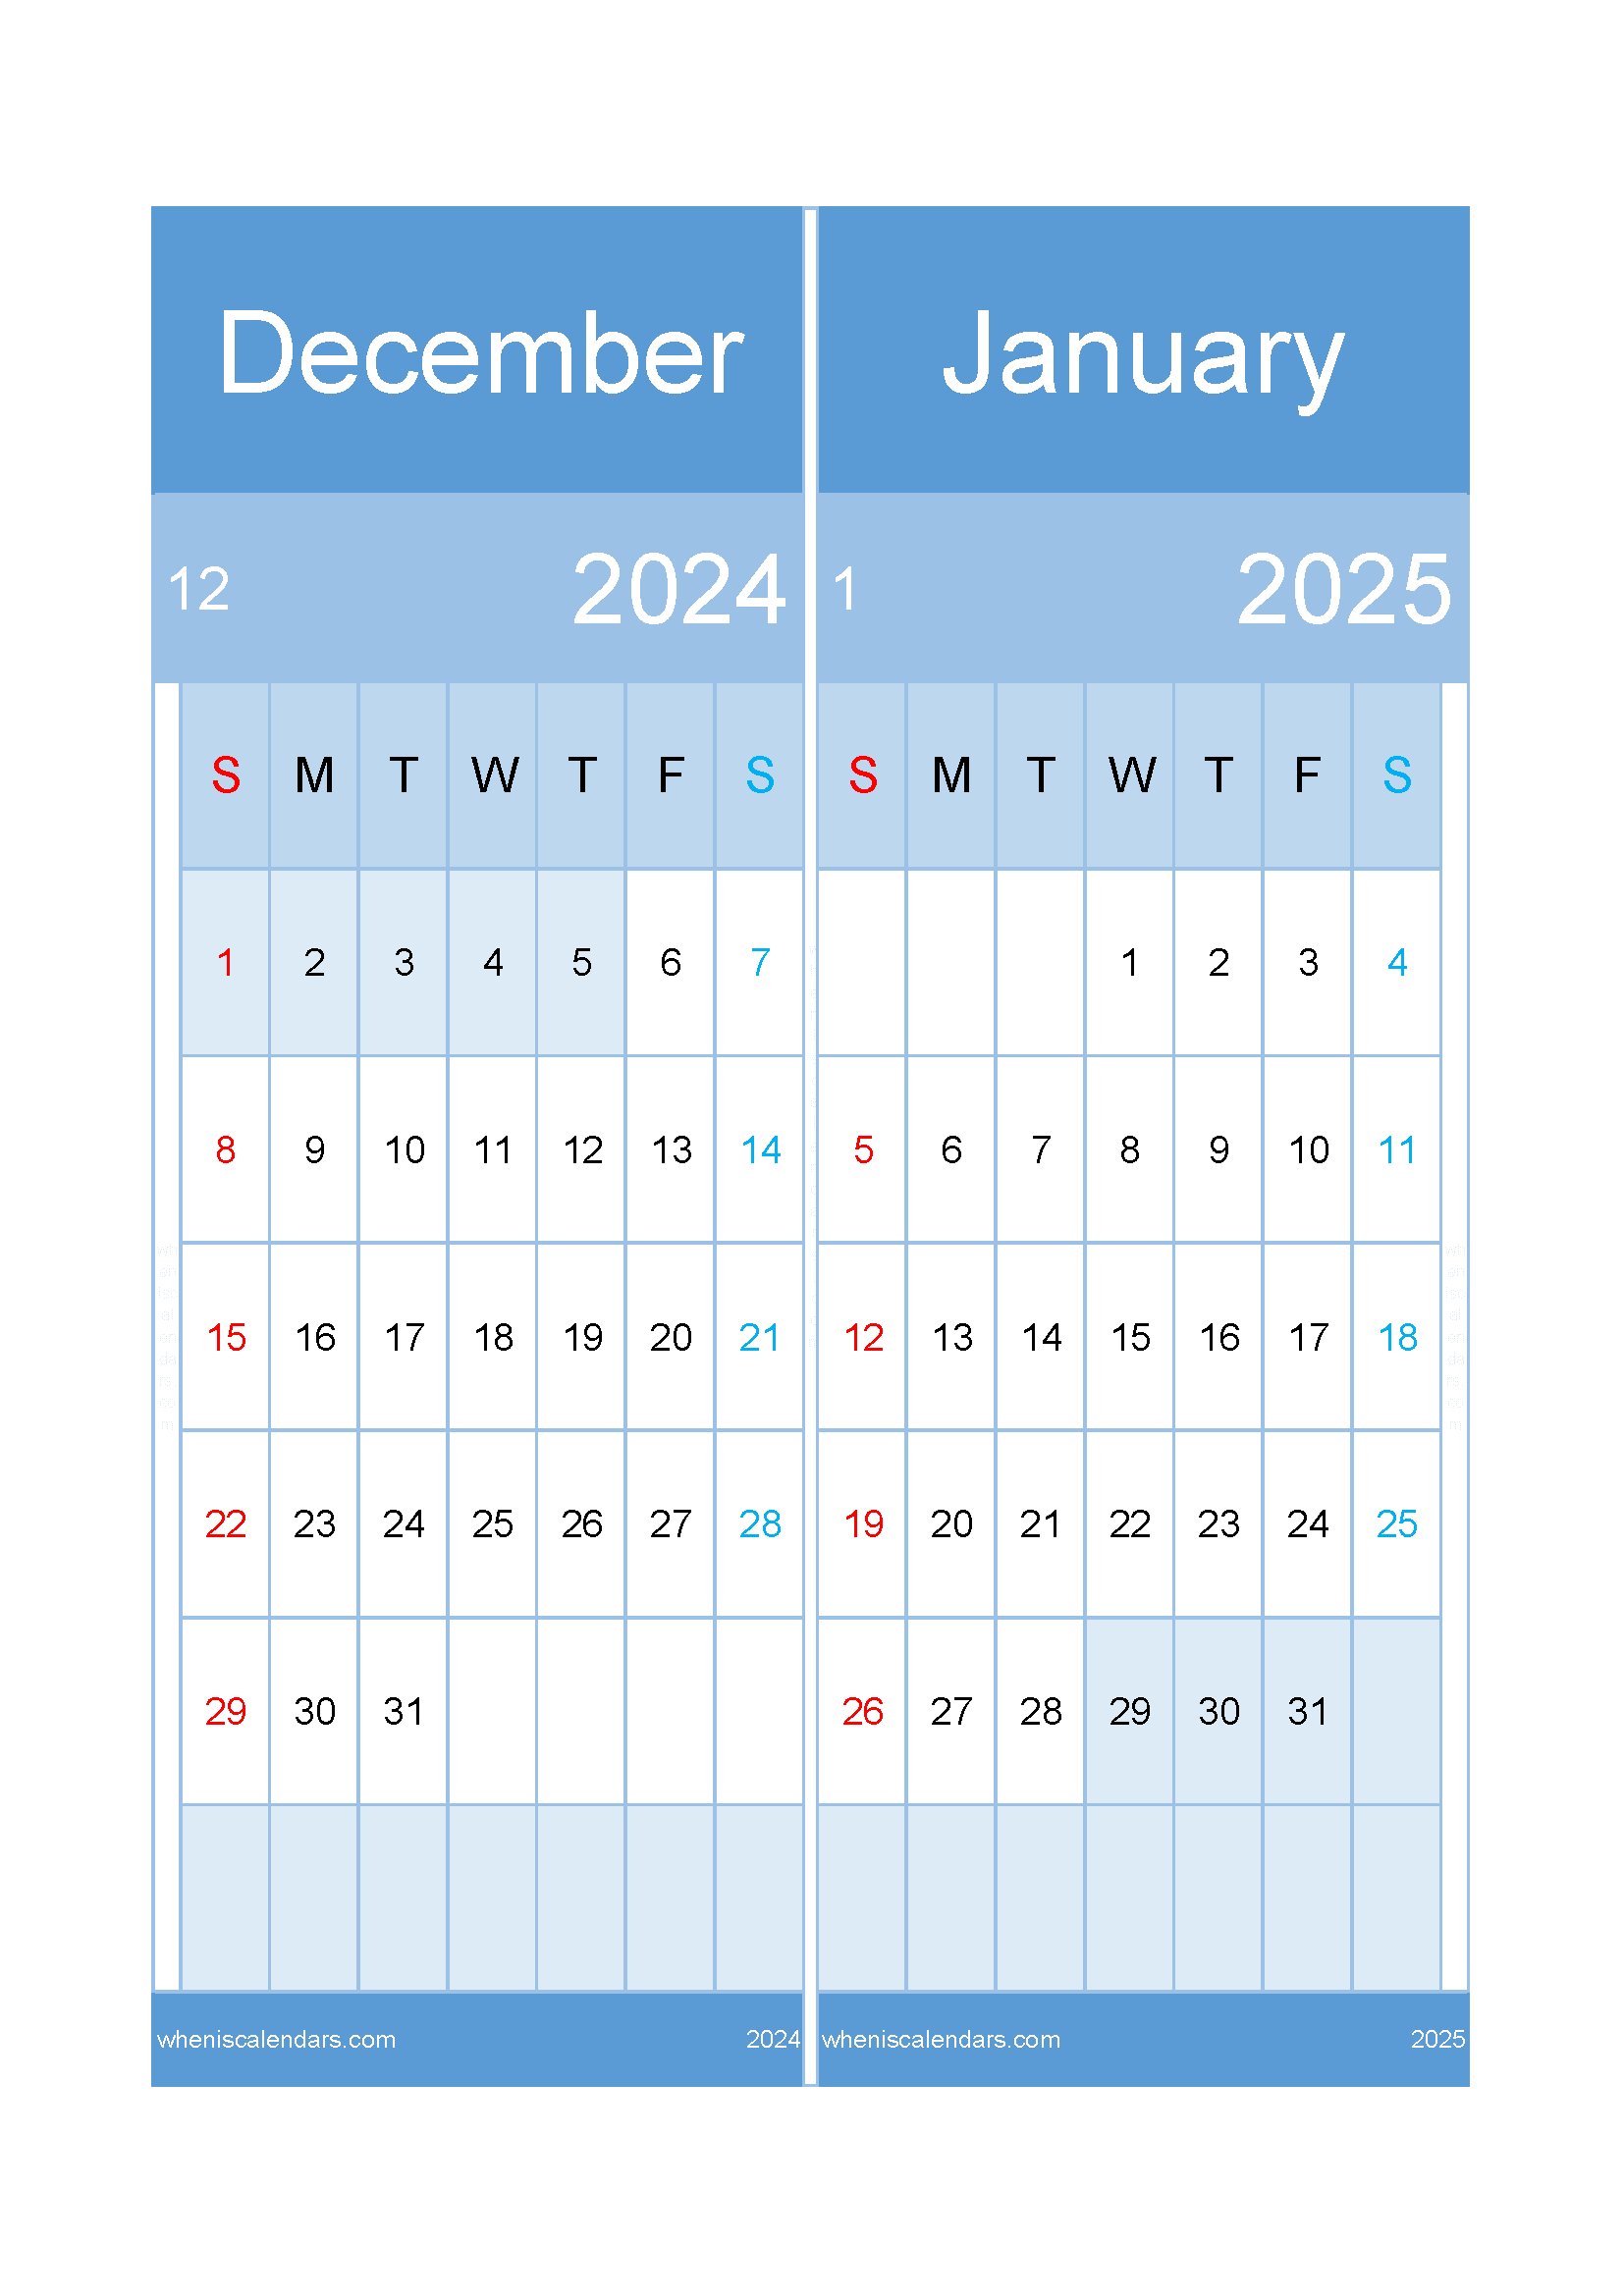 Download December 2024 to January 2025 Calendar A4 D4J524